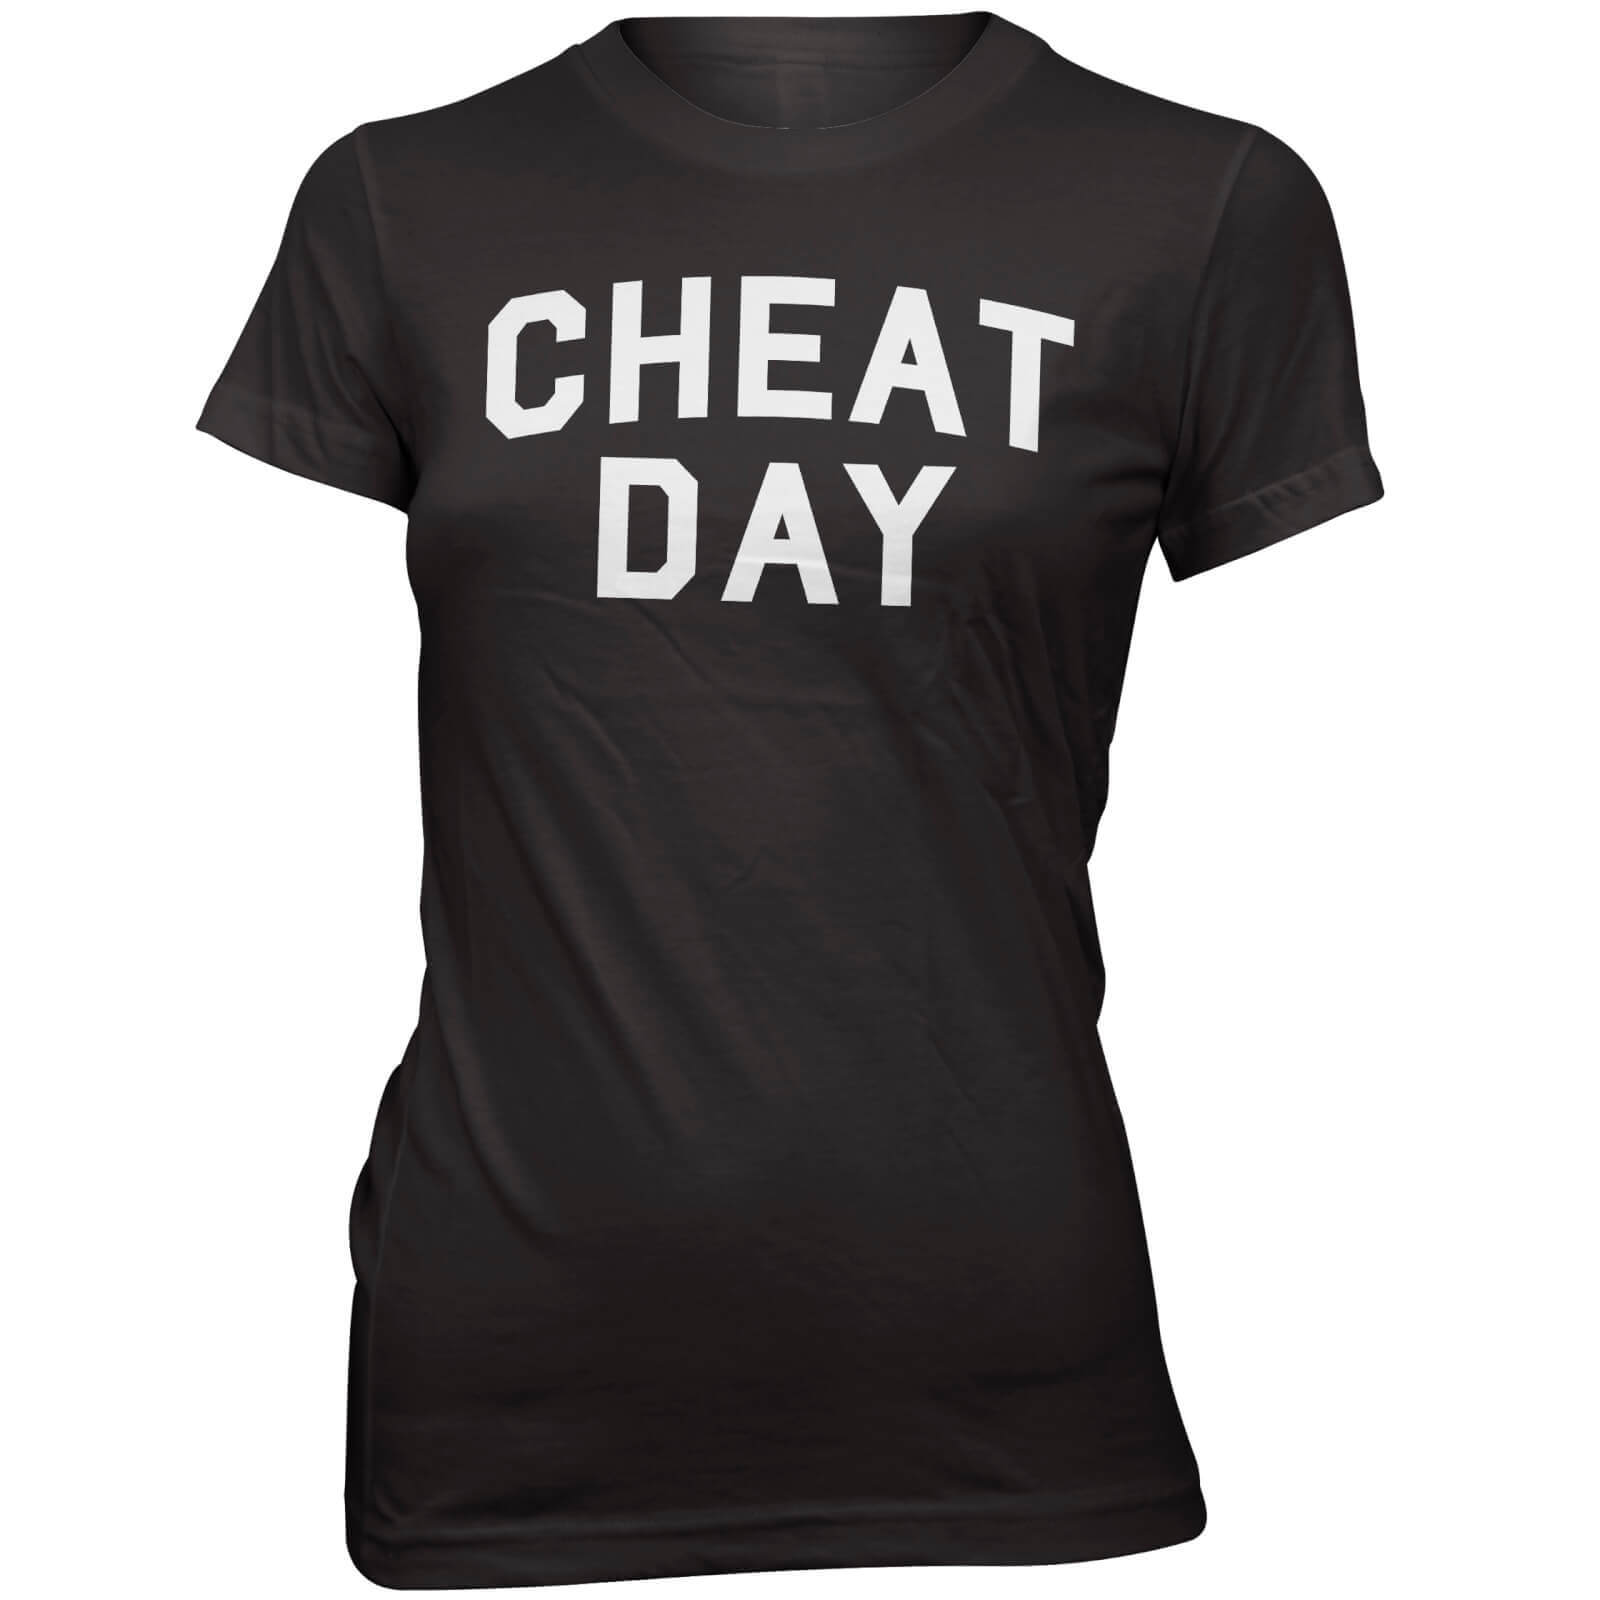 Cheat Day Women's Slogan T-Shirt - S - Black